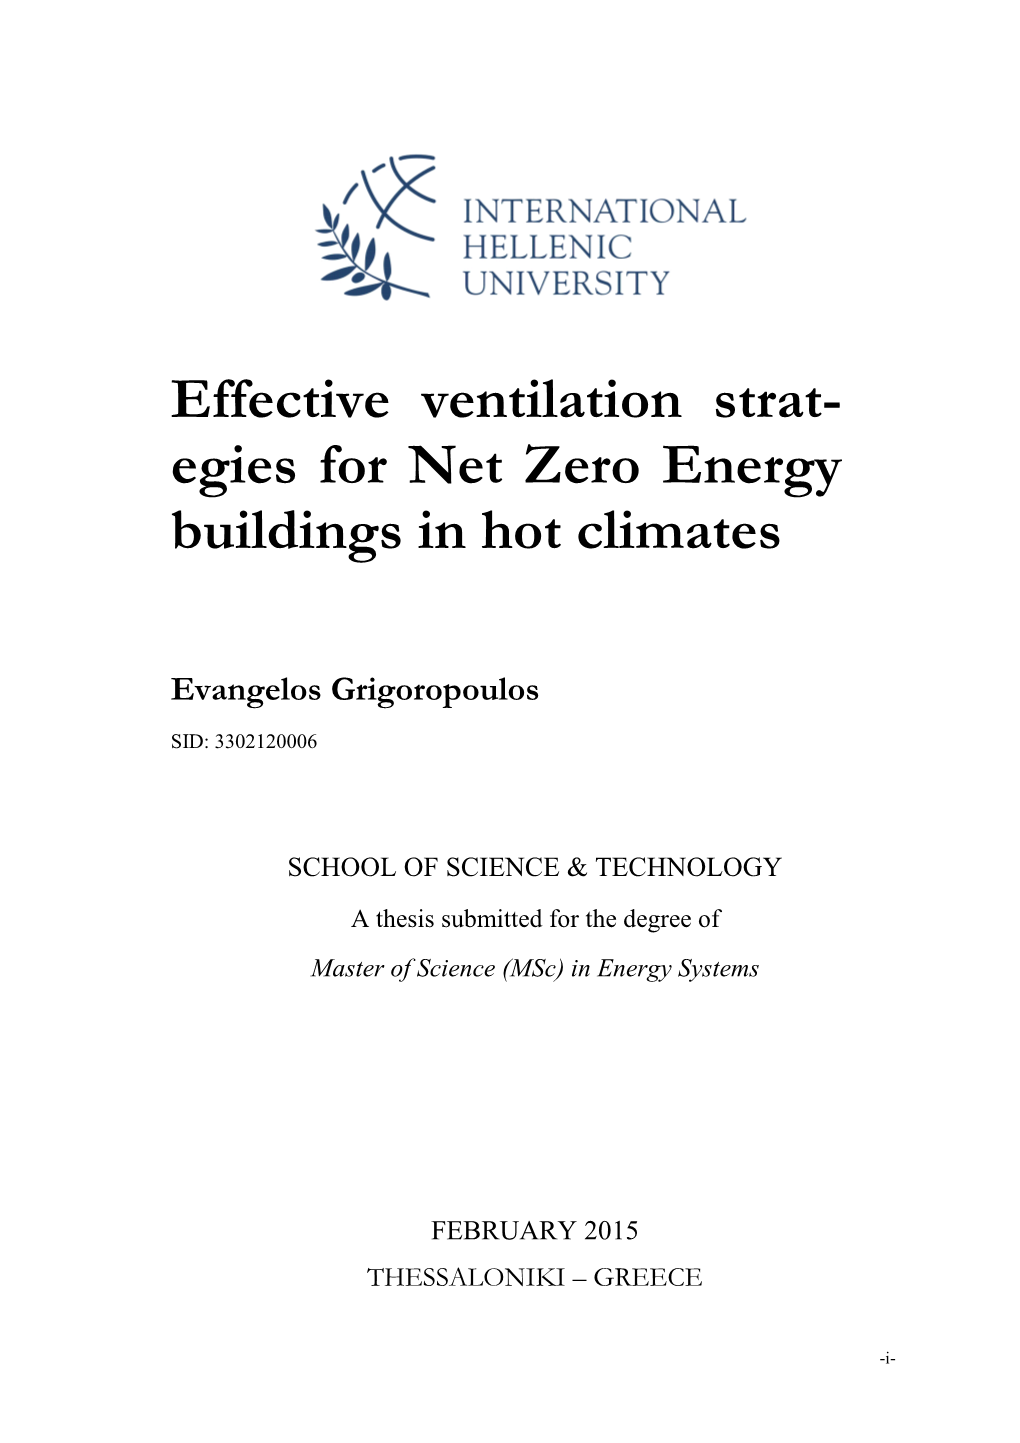 Egies for Net Zero Energy Buildings in Hot Climates